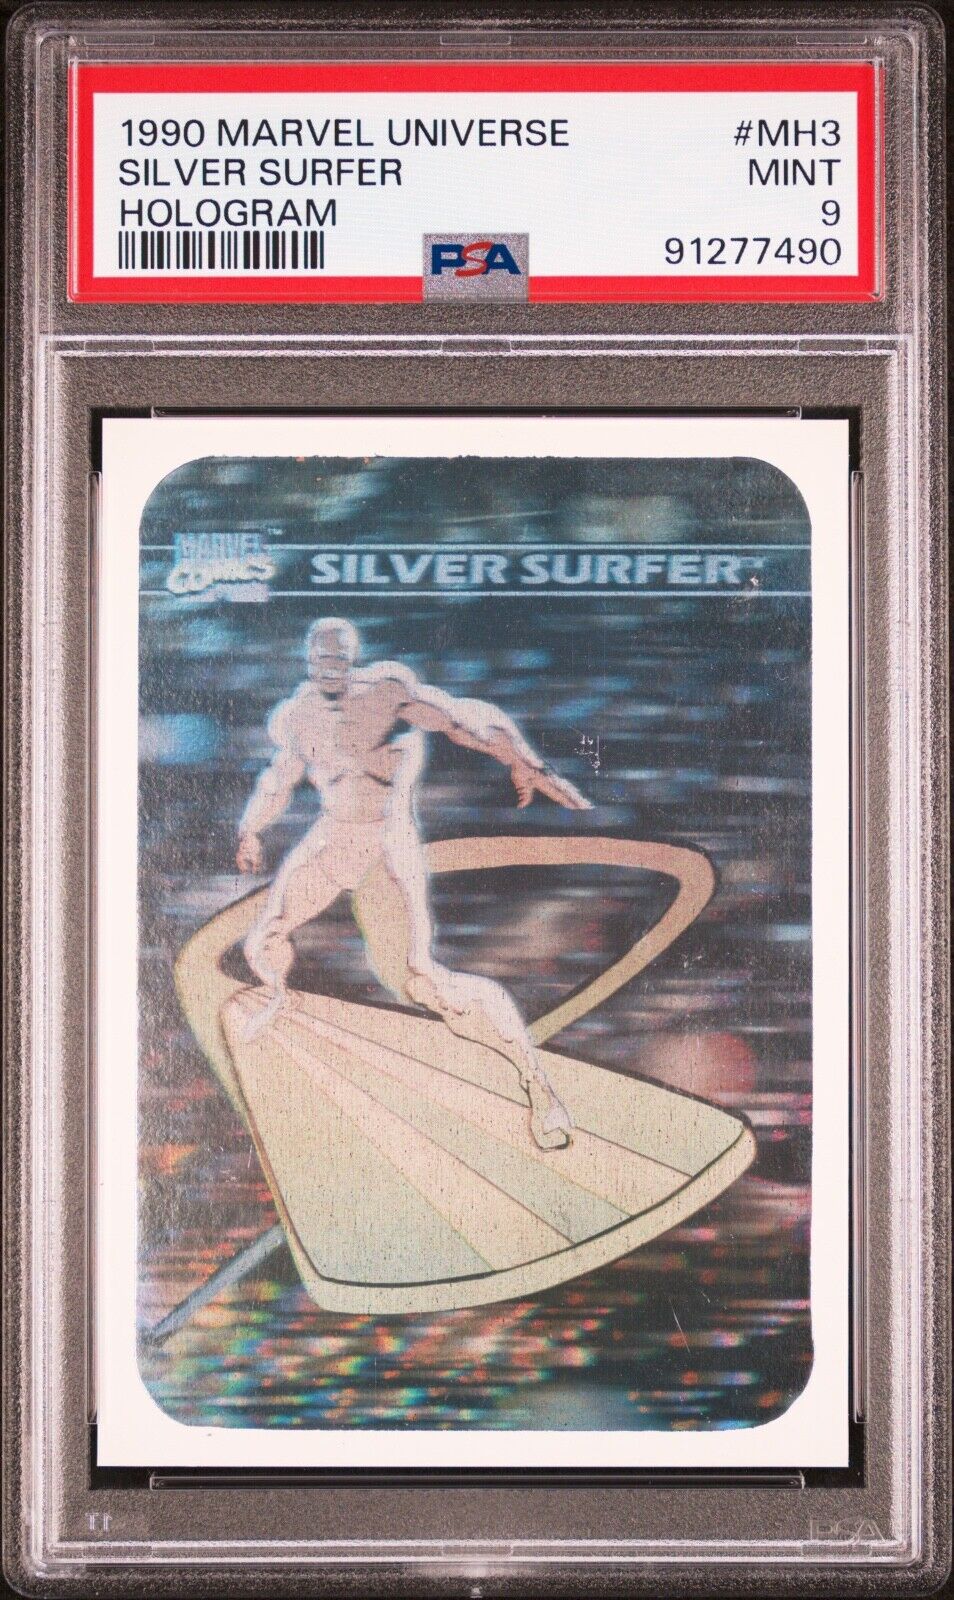 1990 Impel Marvel Universe Hologram MH3 Silver Surfer PSA MINT 9 - Newly Graded